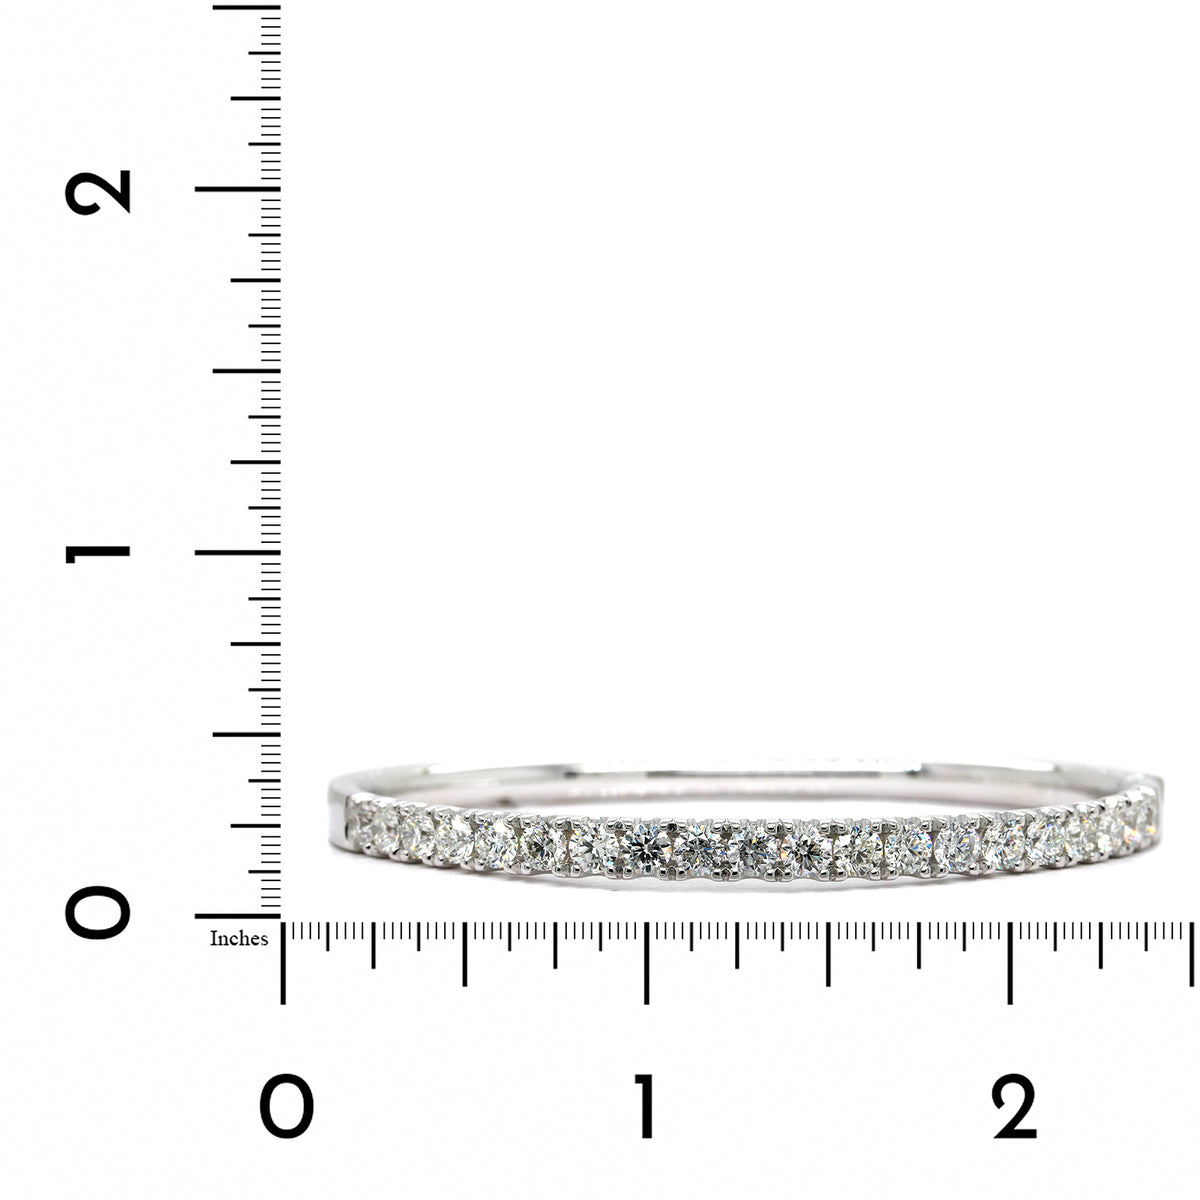 14K White Gold Prong Set Diamond Bangle Bracelet